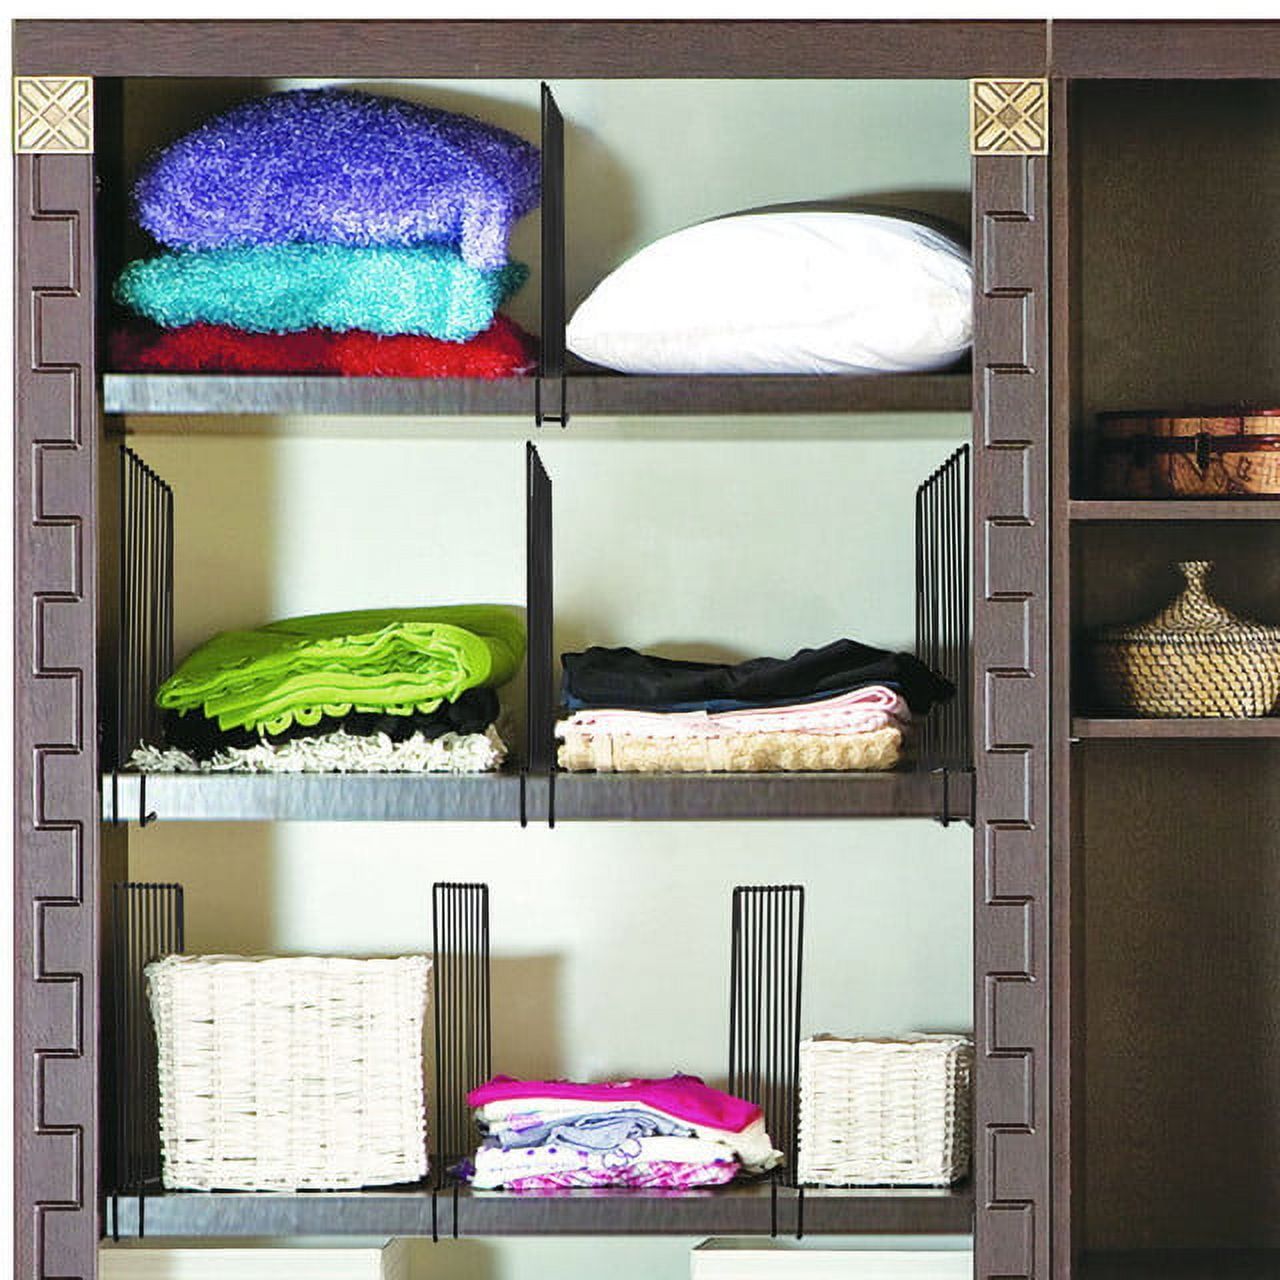 Wardrobe Cabinet Closet Partition Shelf Dividers Multifunction